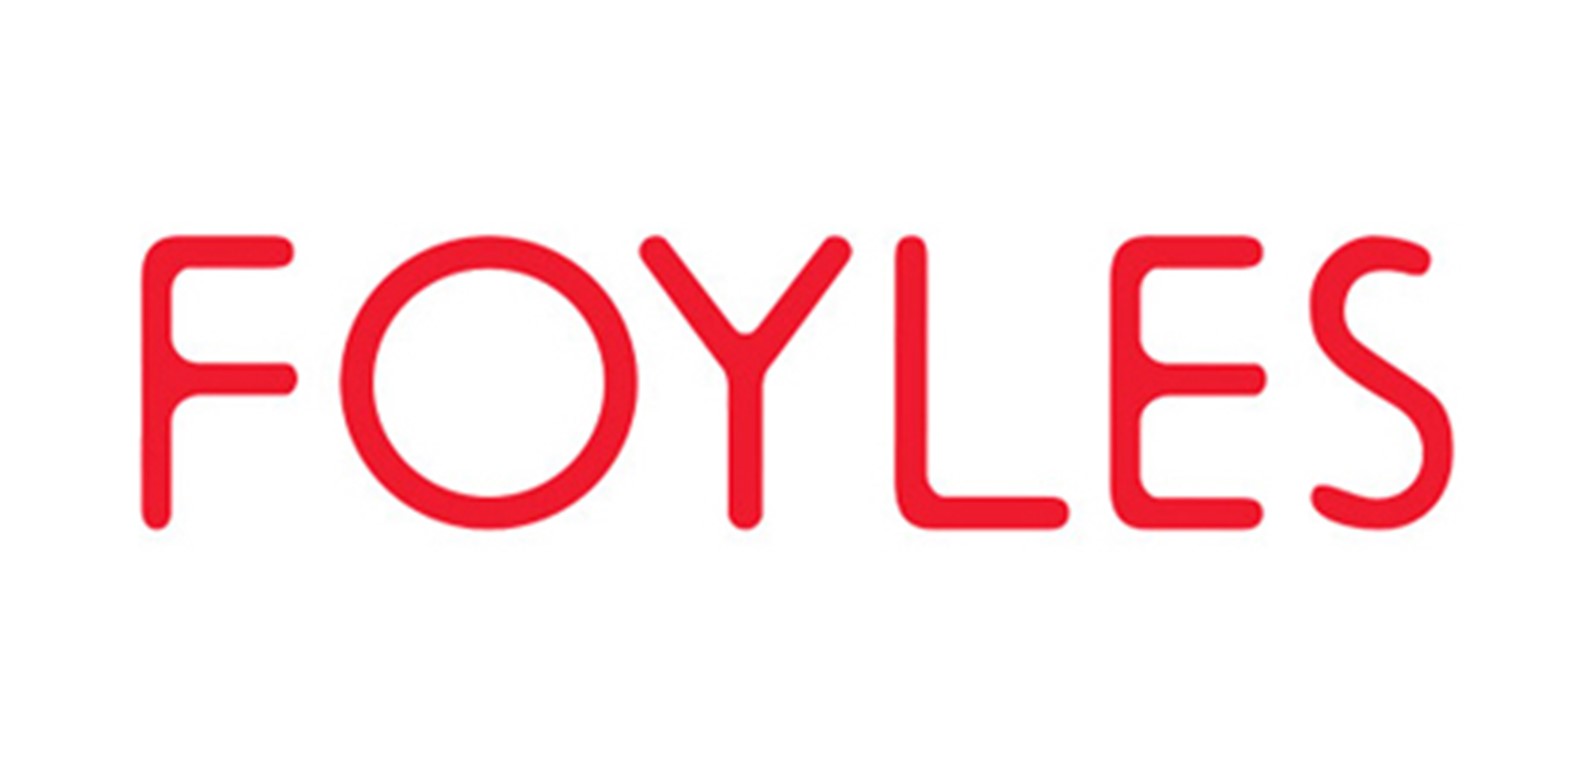 Foyles (W G Foyle Ltd) Bristol